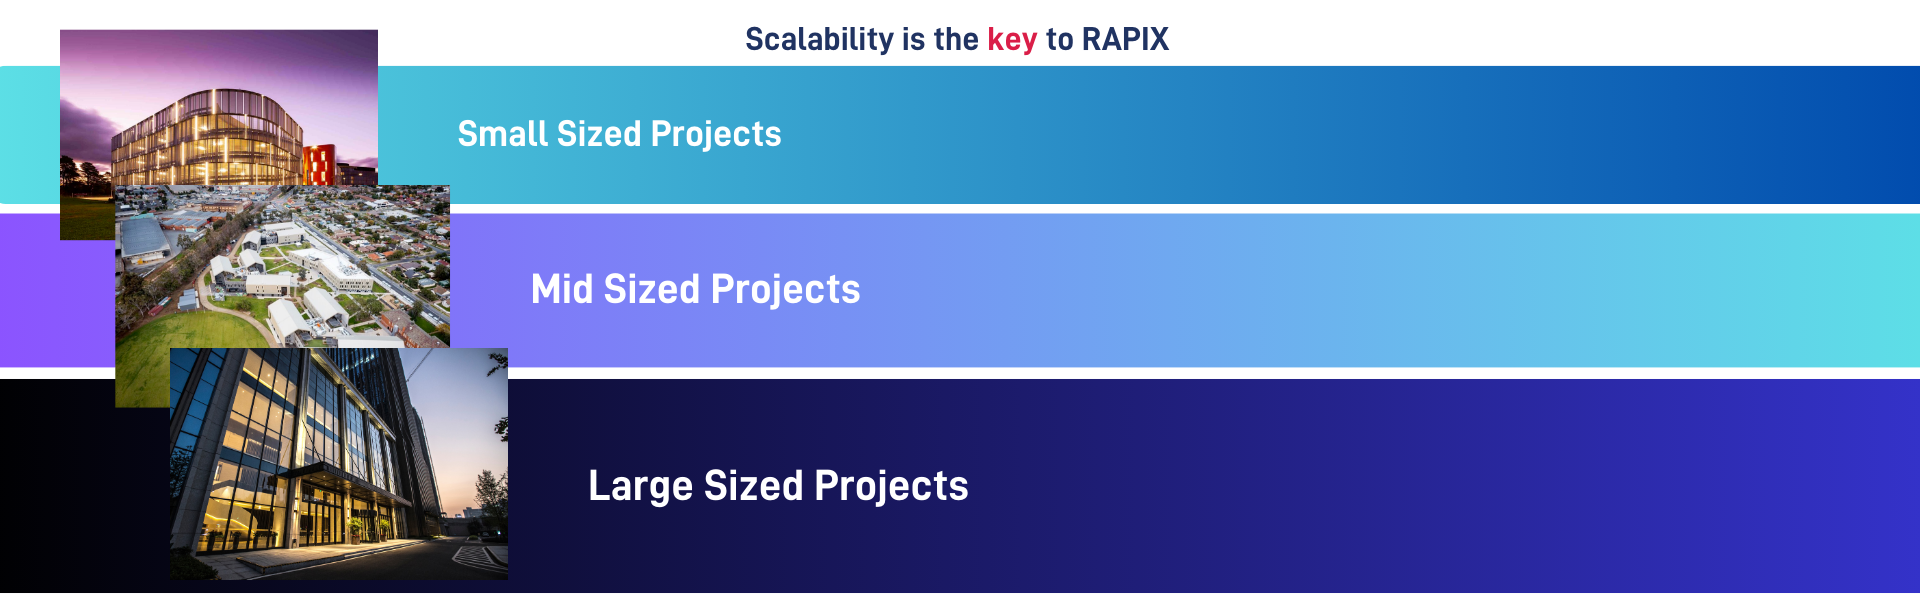 RAPIX Scalability